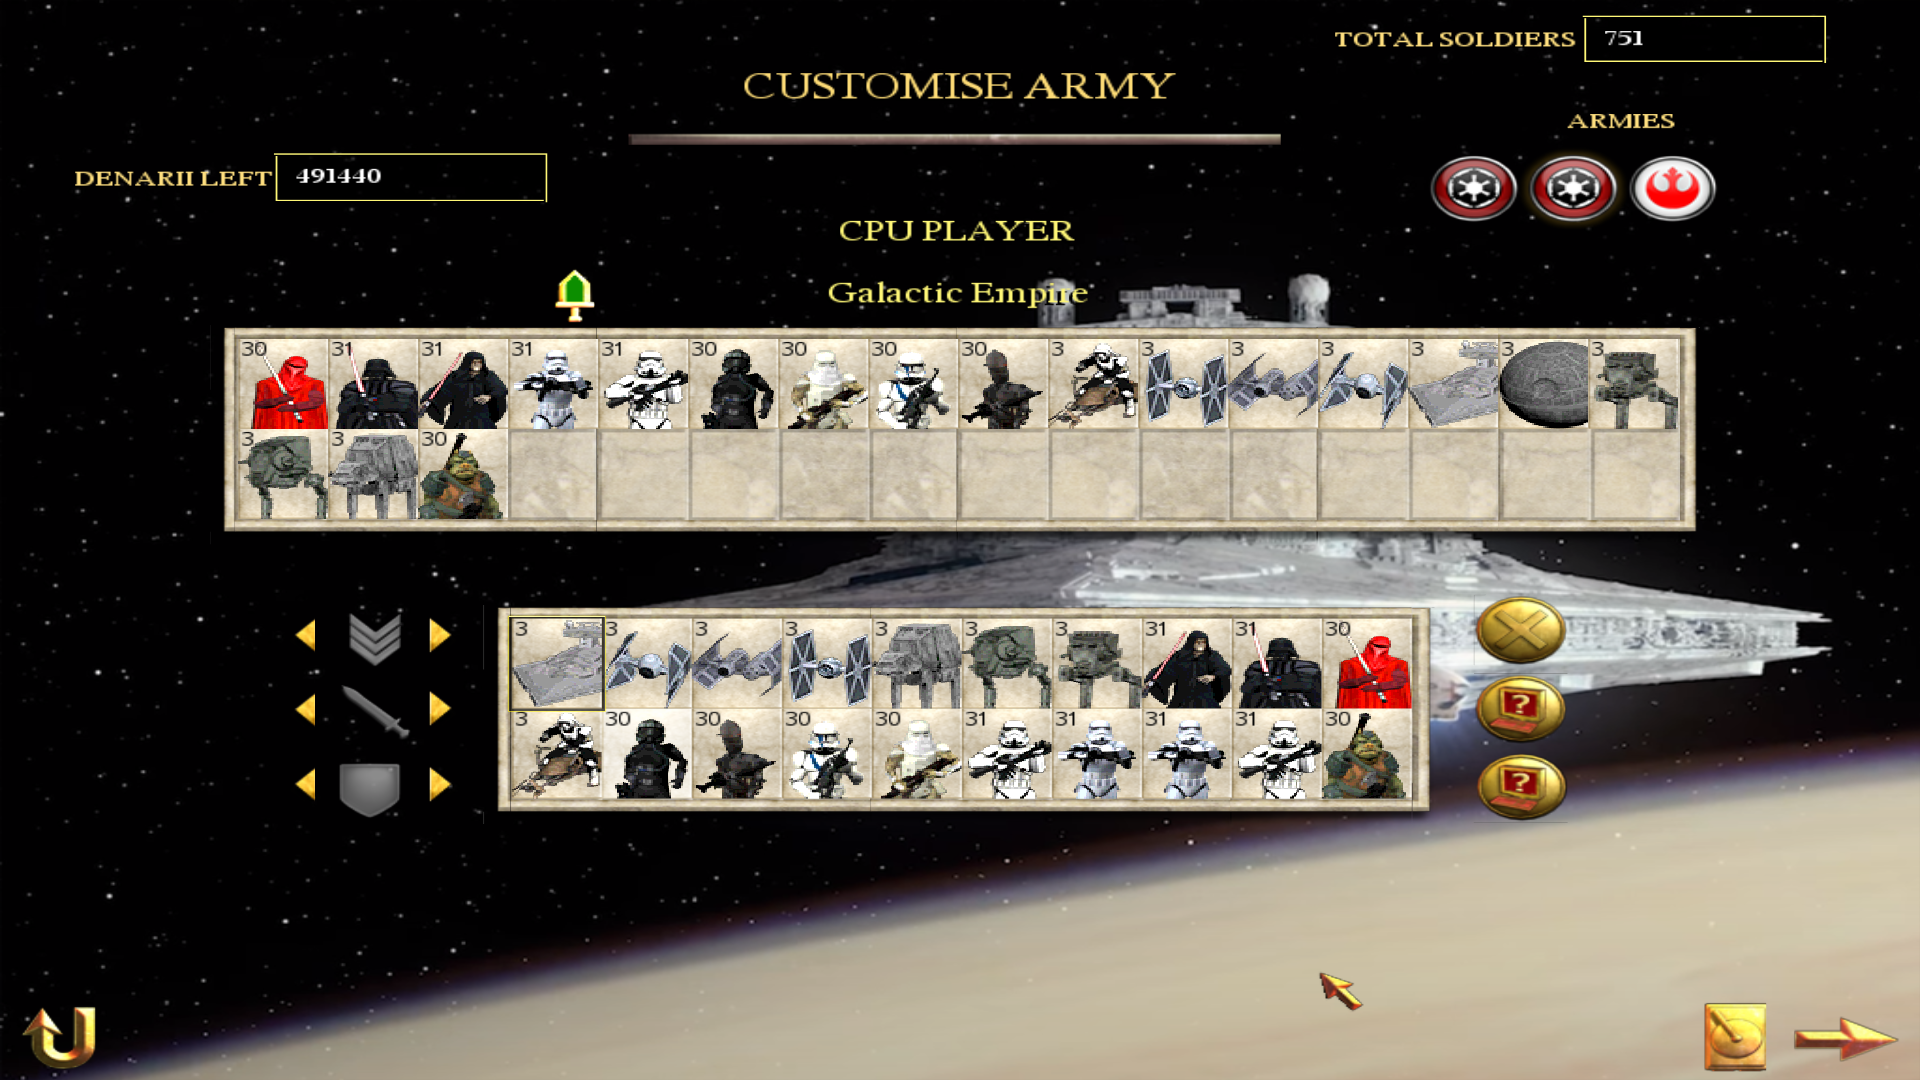 The Galactic Empire has three new units!